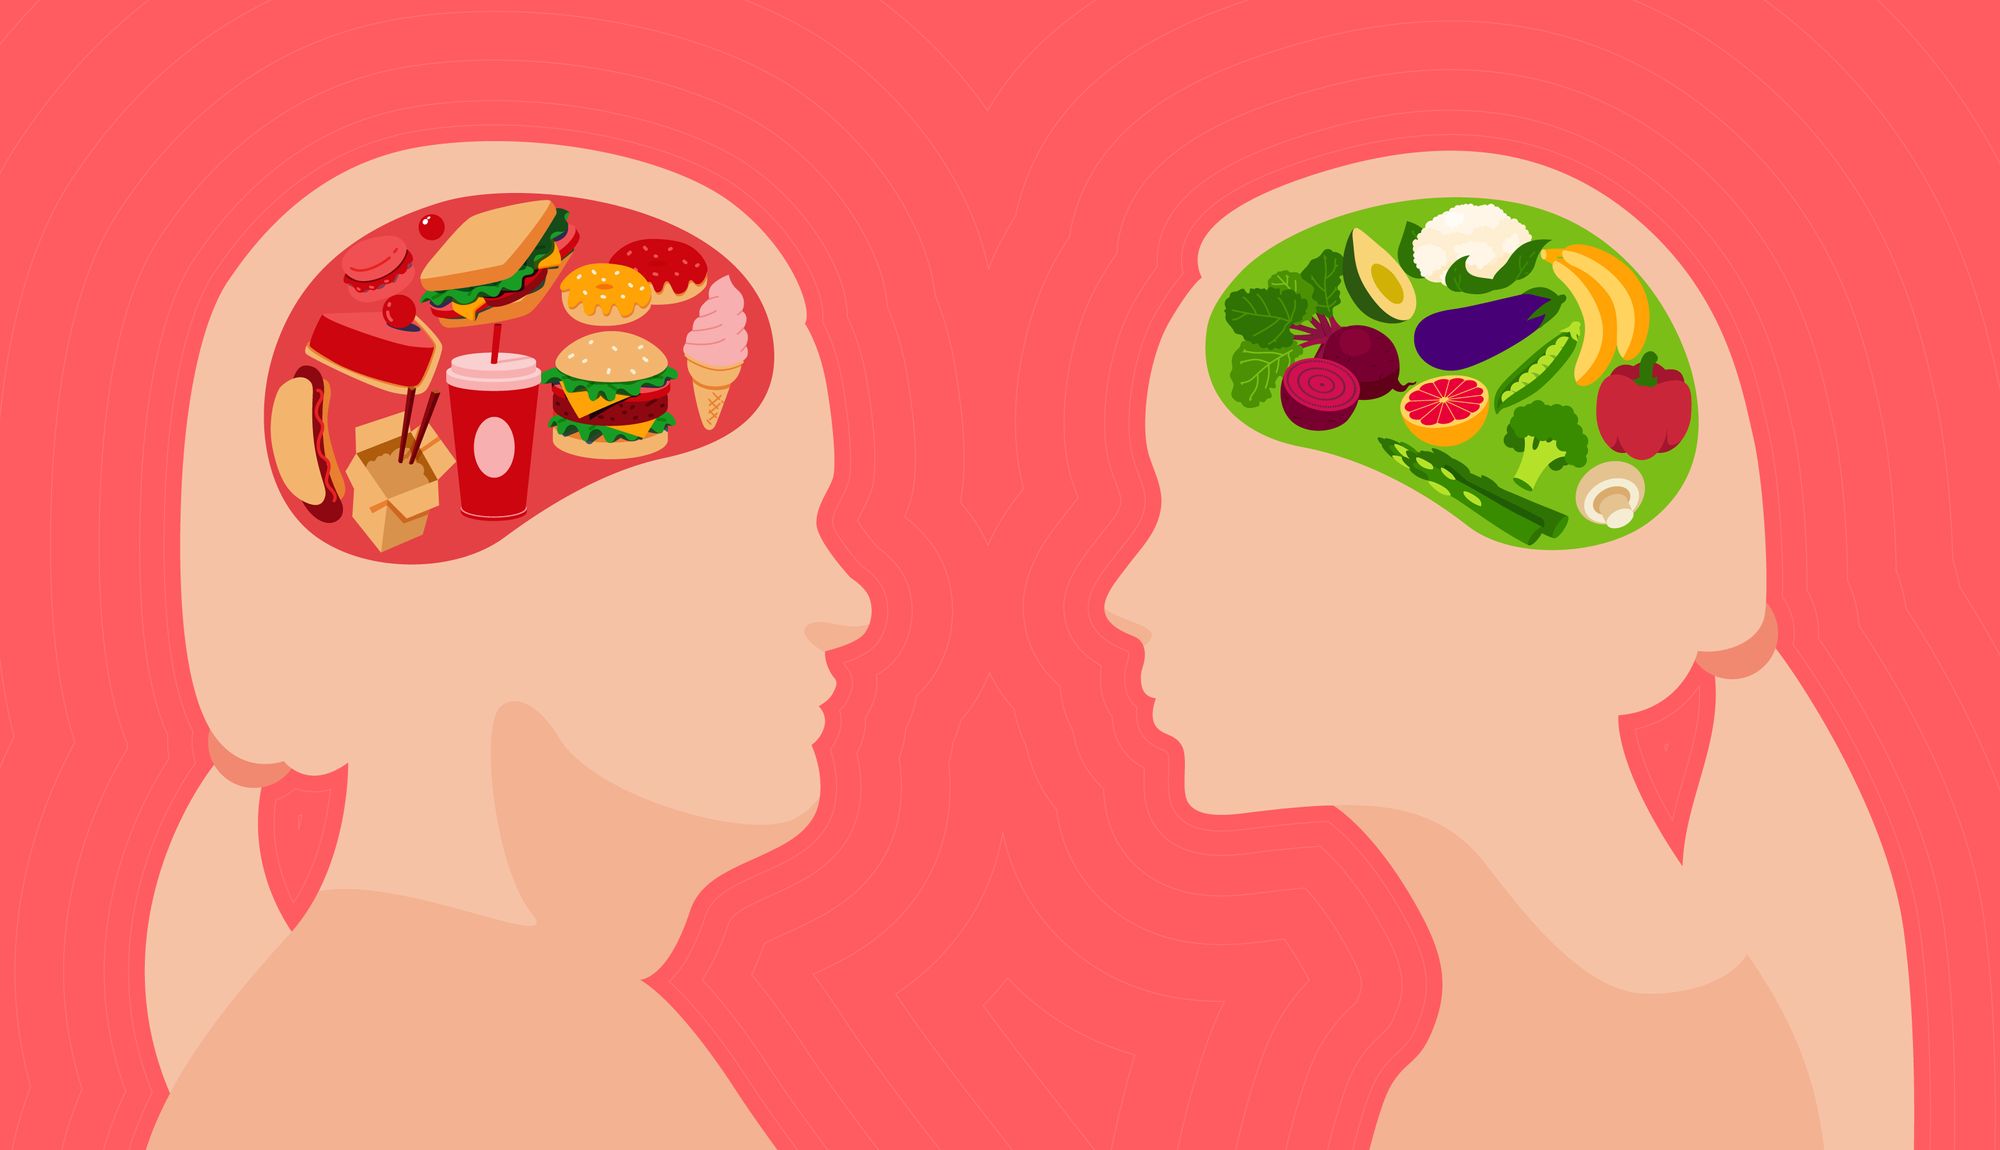 food and mental health